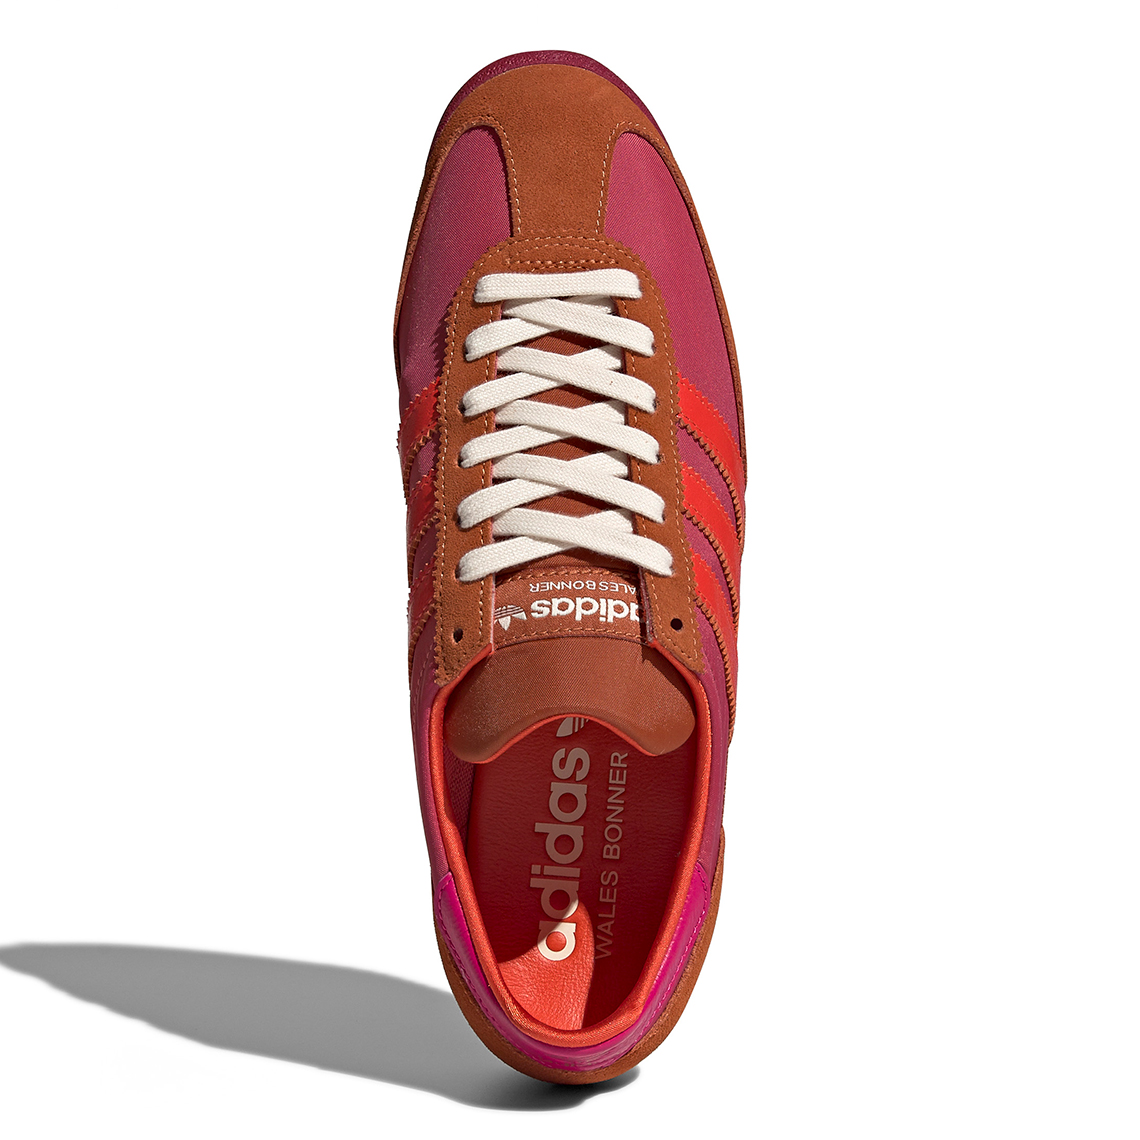 Wales Bonner Adidas Sl72 Red Fx7502 4